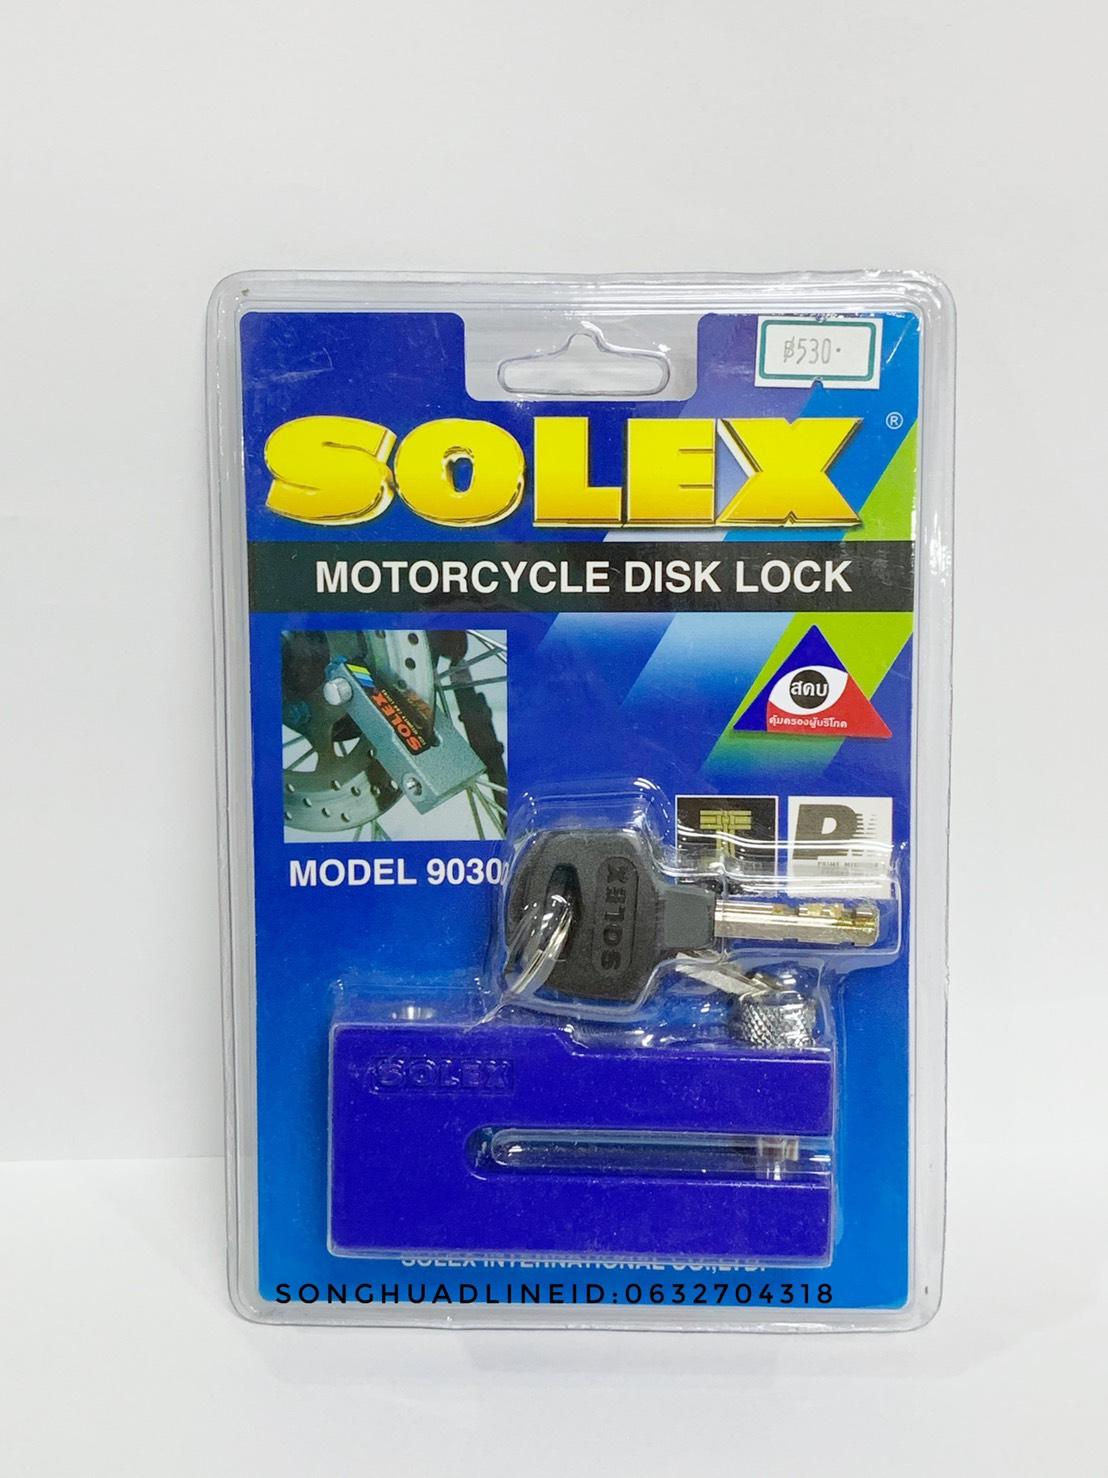 Solex กุญแจล็อคดิสเบรคมอเตอร์ไซค์ รุ่น.9030 ใช้ได้กับรถทุกรุ่นที่มีดิสเบรค แกนล็อคหนา 10 mm. แข็งแรงทนทาน